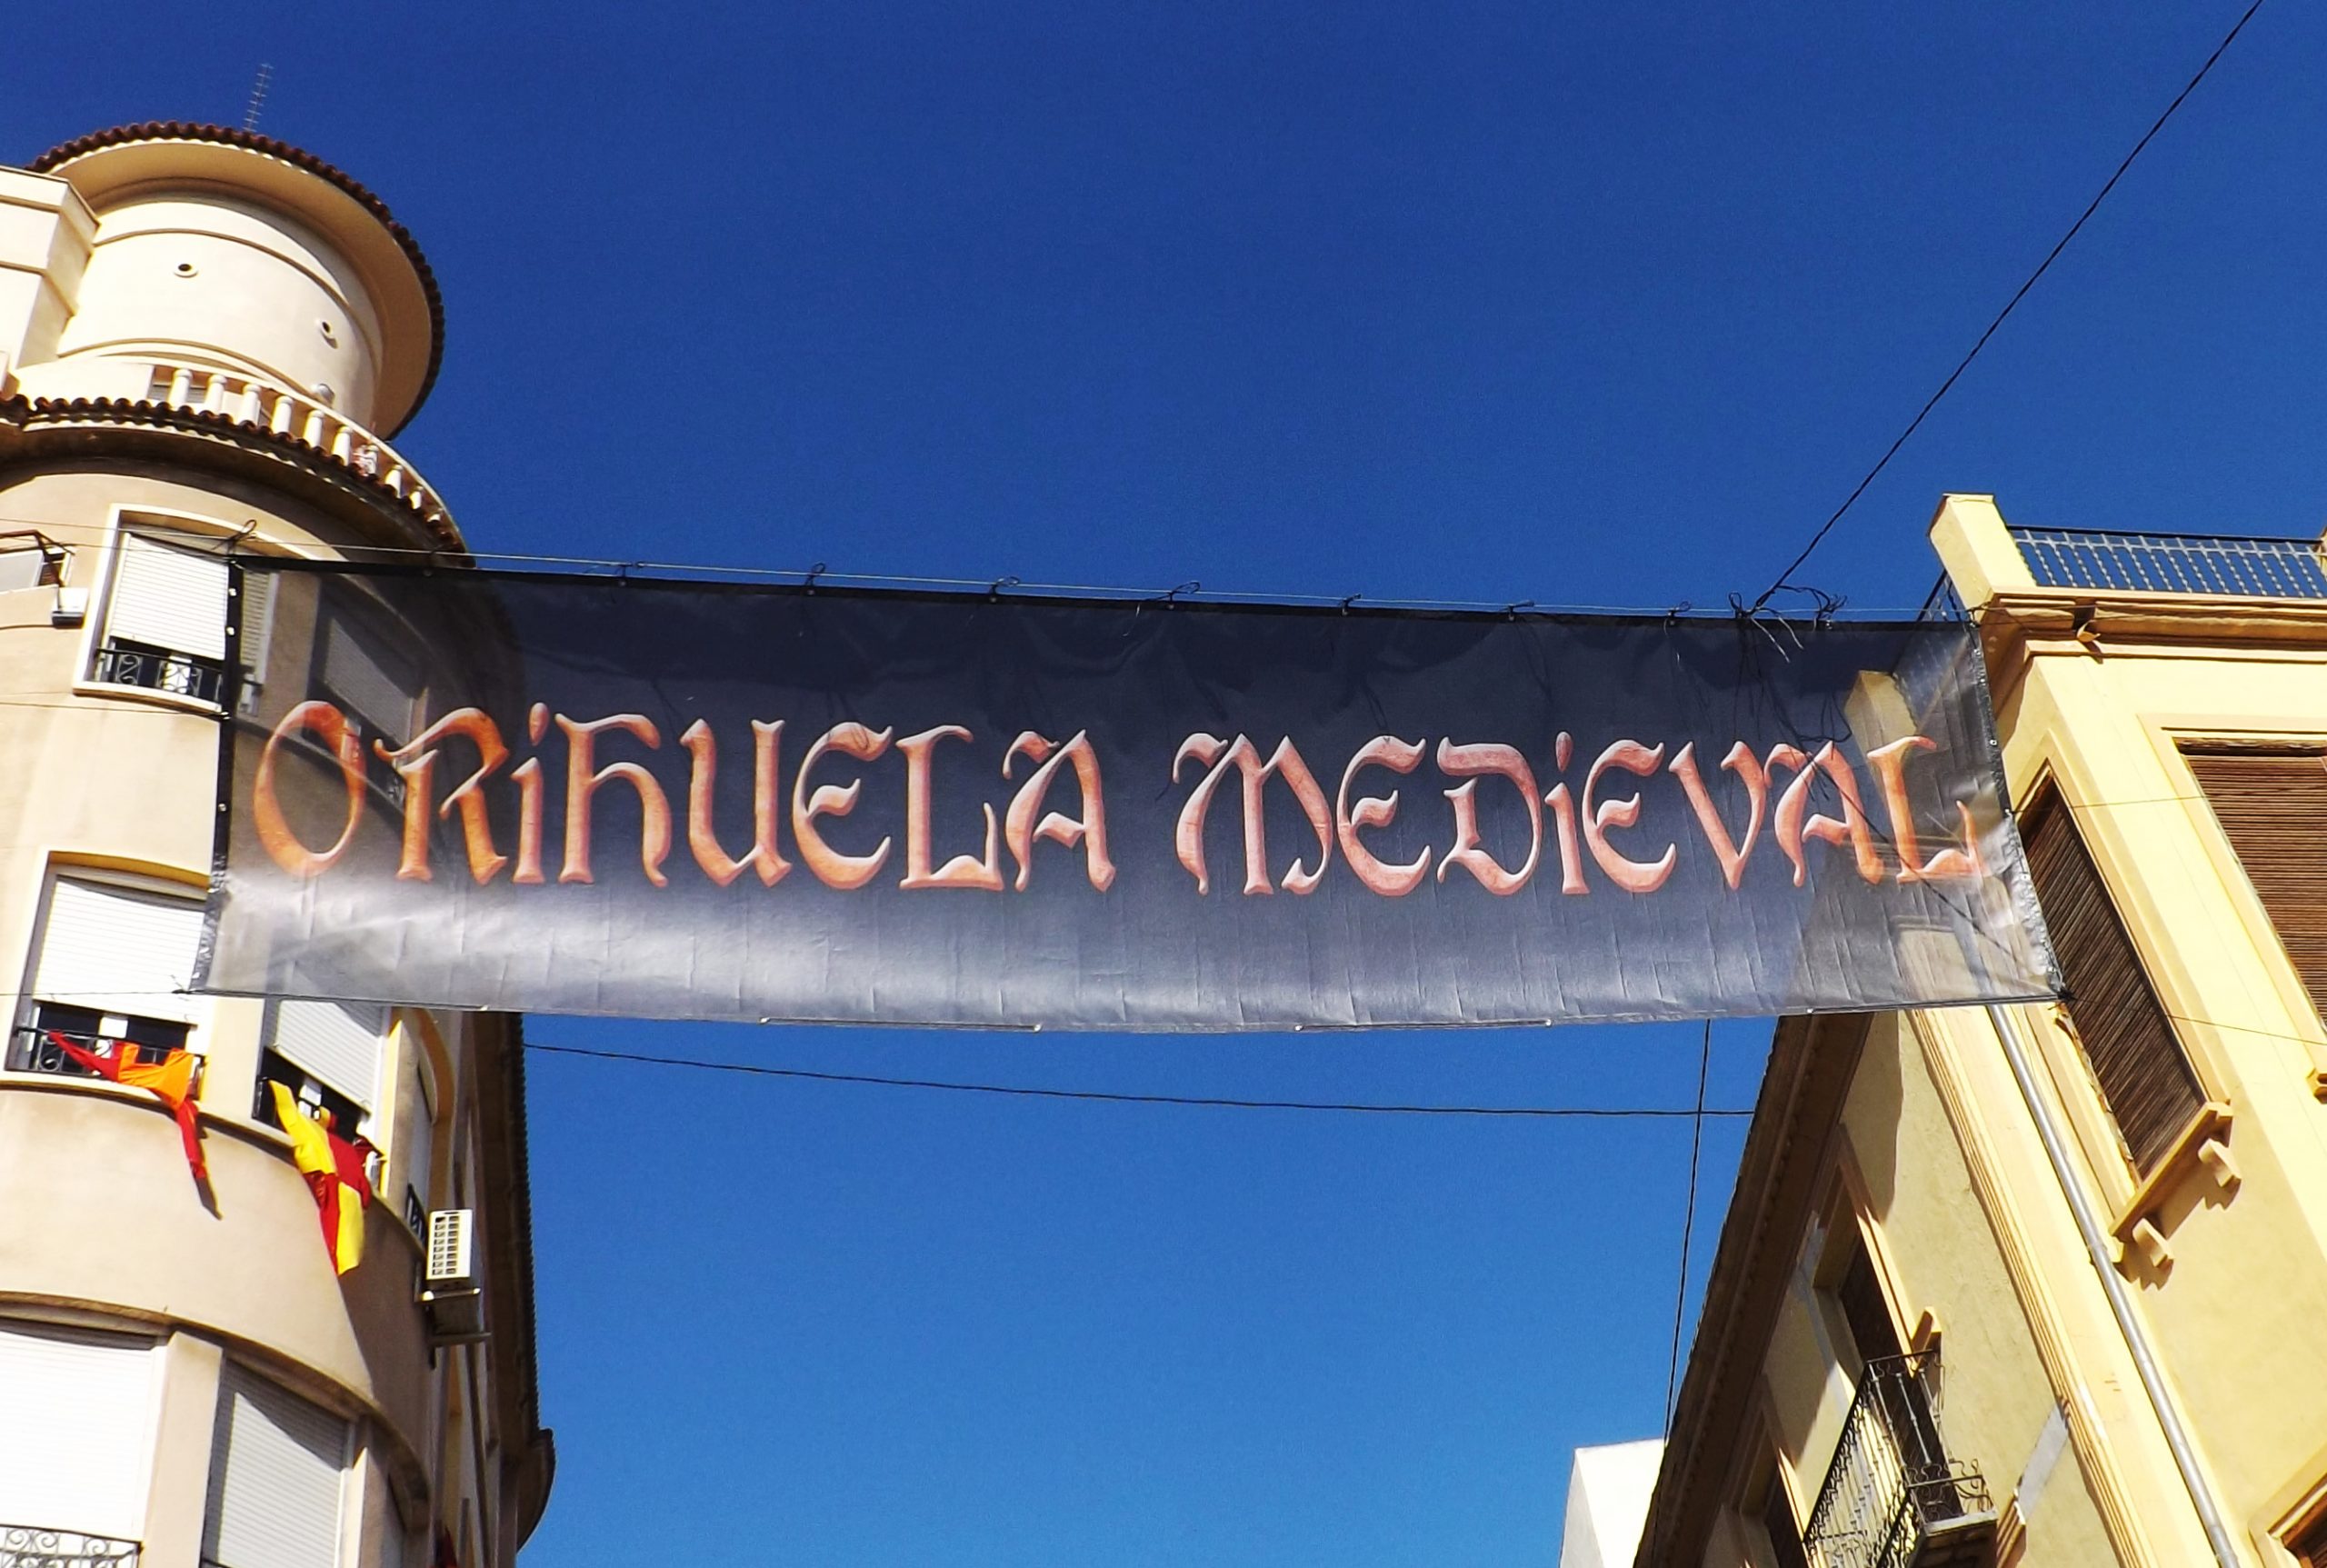 Big medieval market on Spain’s Costa Blanca returns after pandemic break